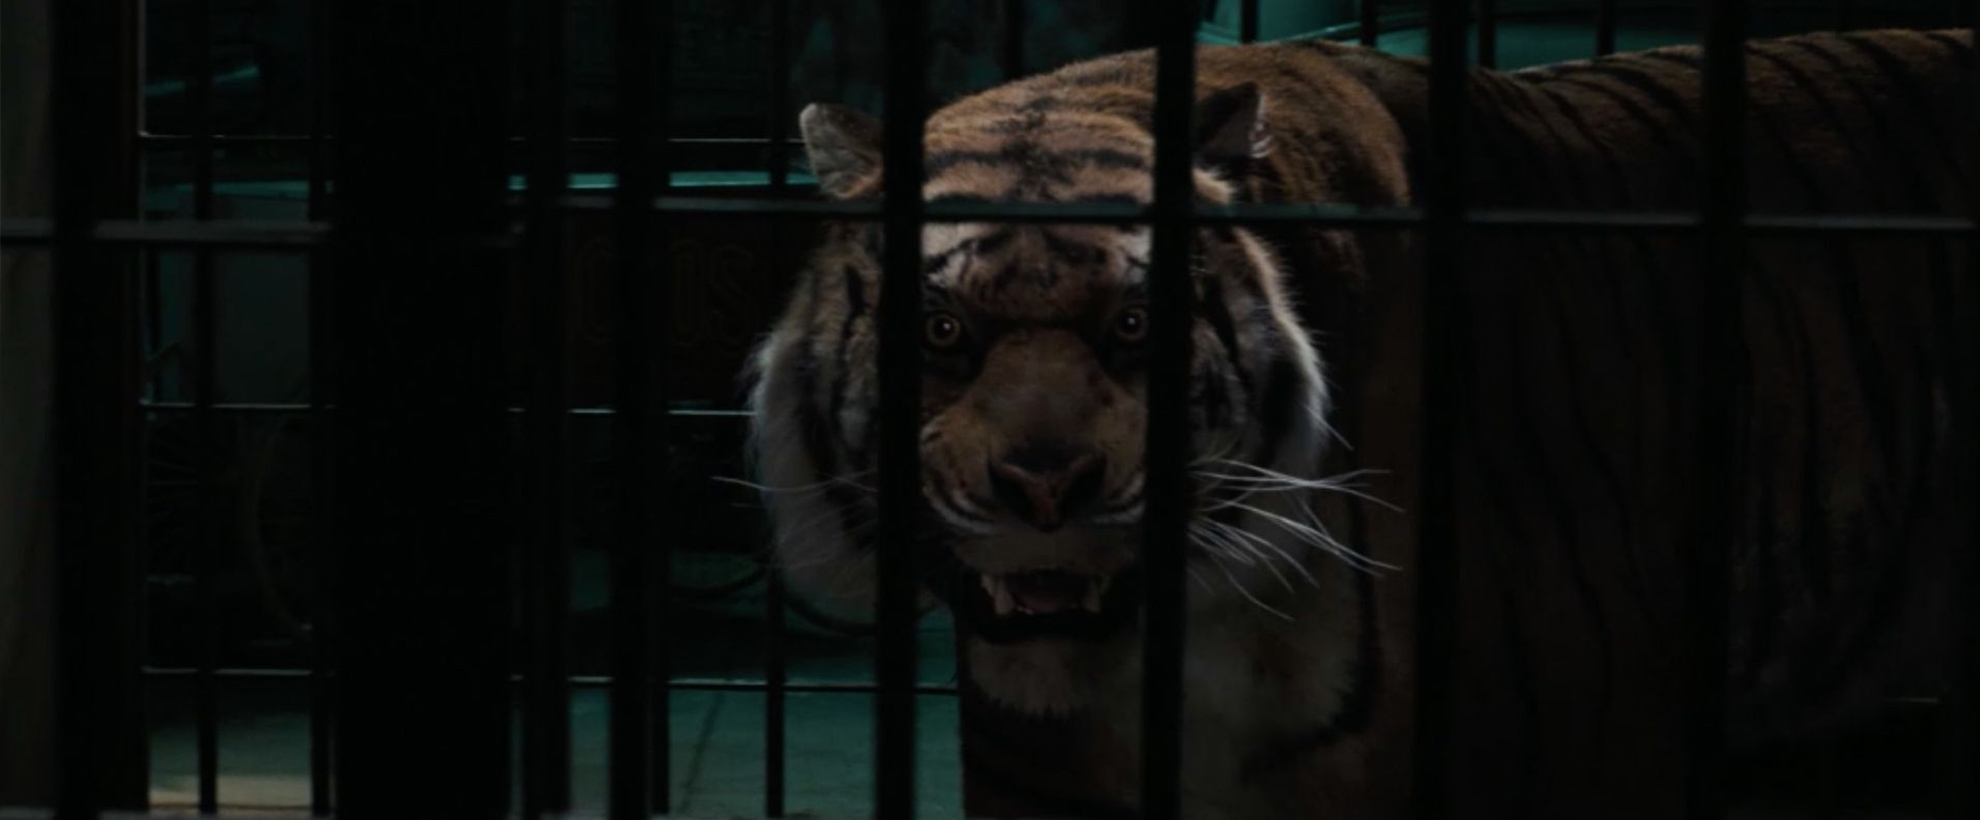 A CG tiger snarls behind bars